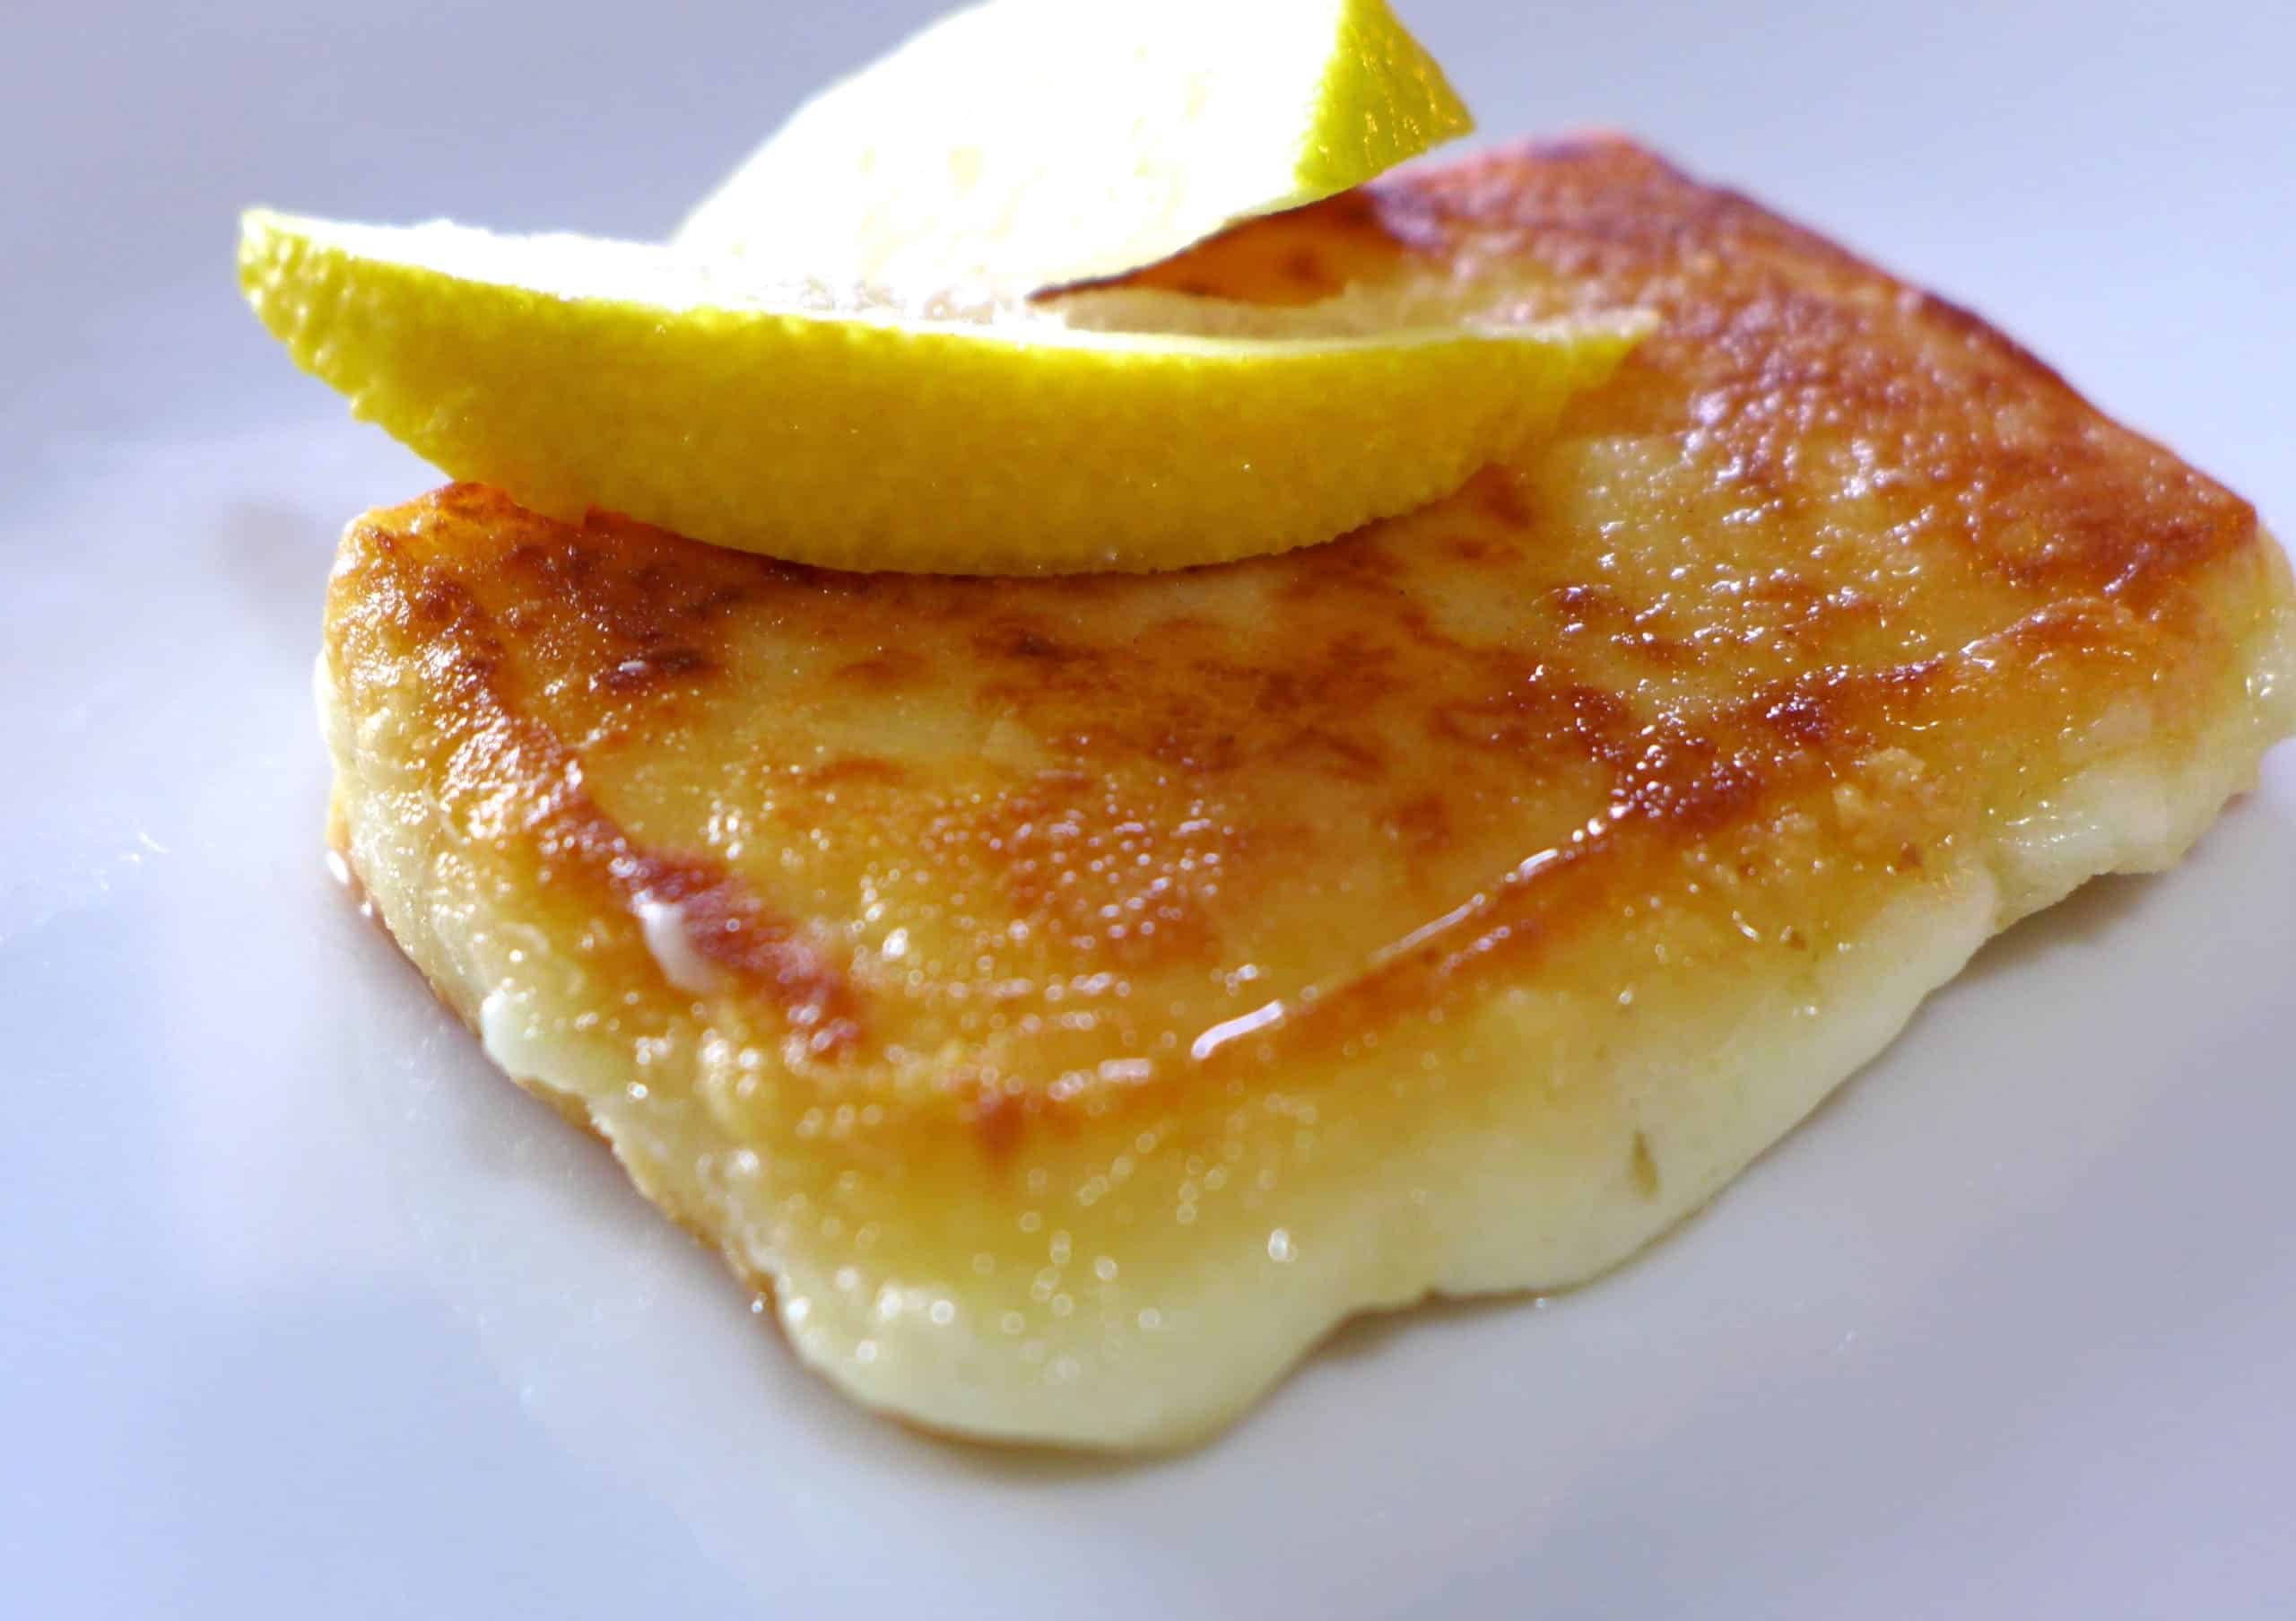 https://www.mygreekdish.com/wp-content/uploads/2013/10/Greek-Saganaki-recipe-Pan-seared-Greek-cheese-appetizer-scaled.jpg